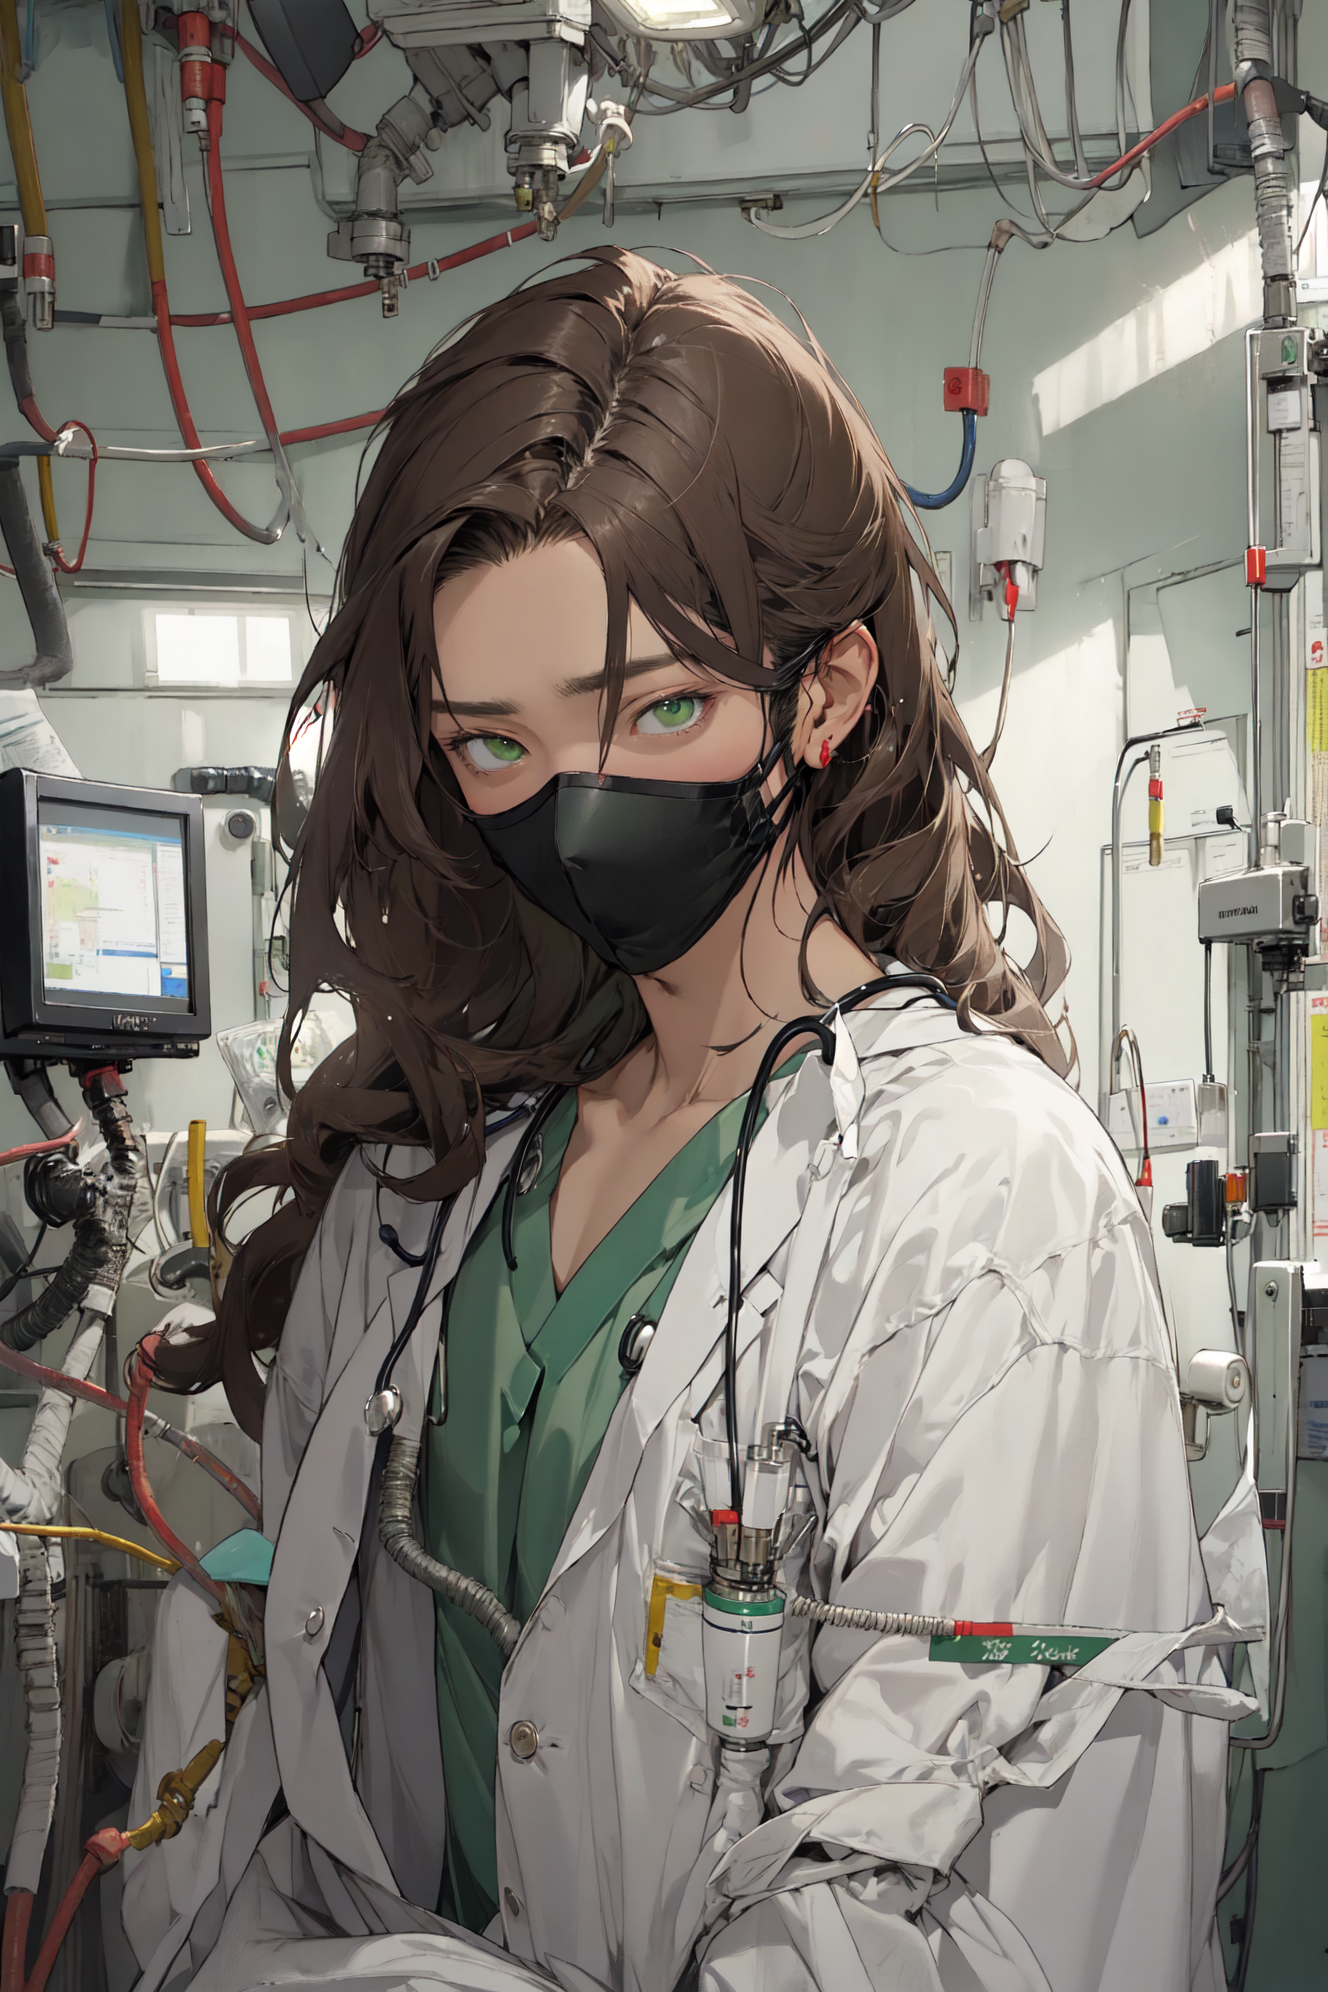 anime surgeon